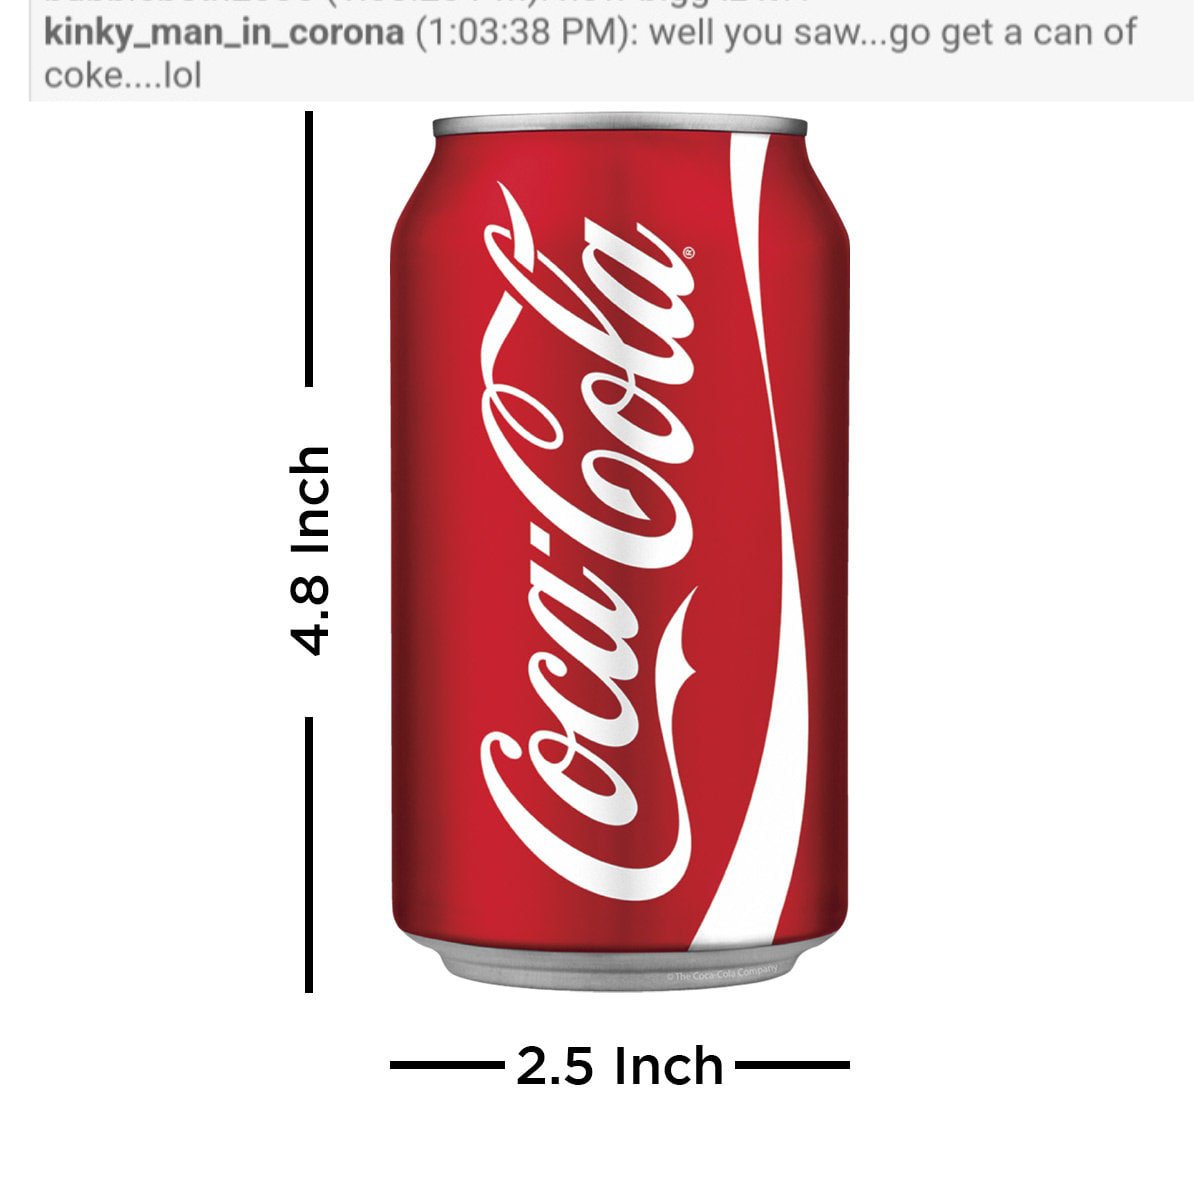 Am I missing something? Were Coca-Cola cans bigger in 2007? #TCAP #tocatchapredator